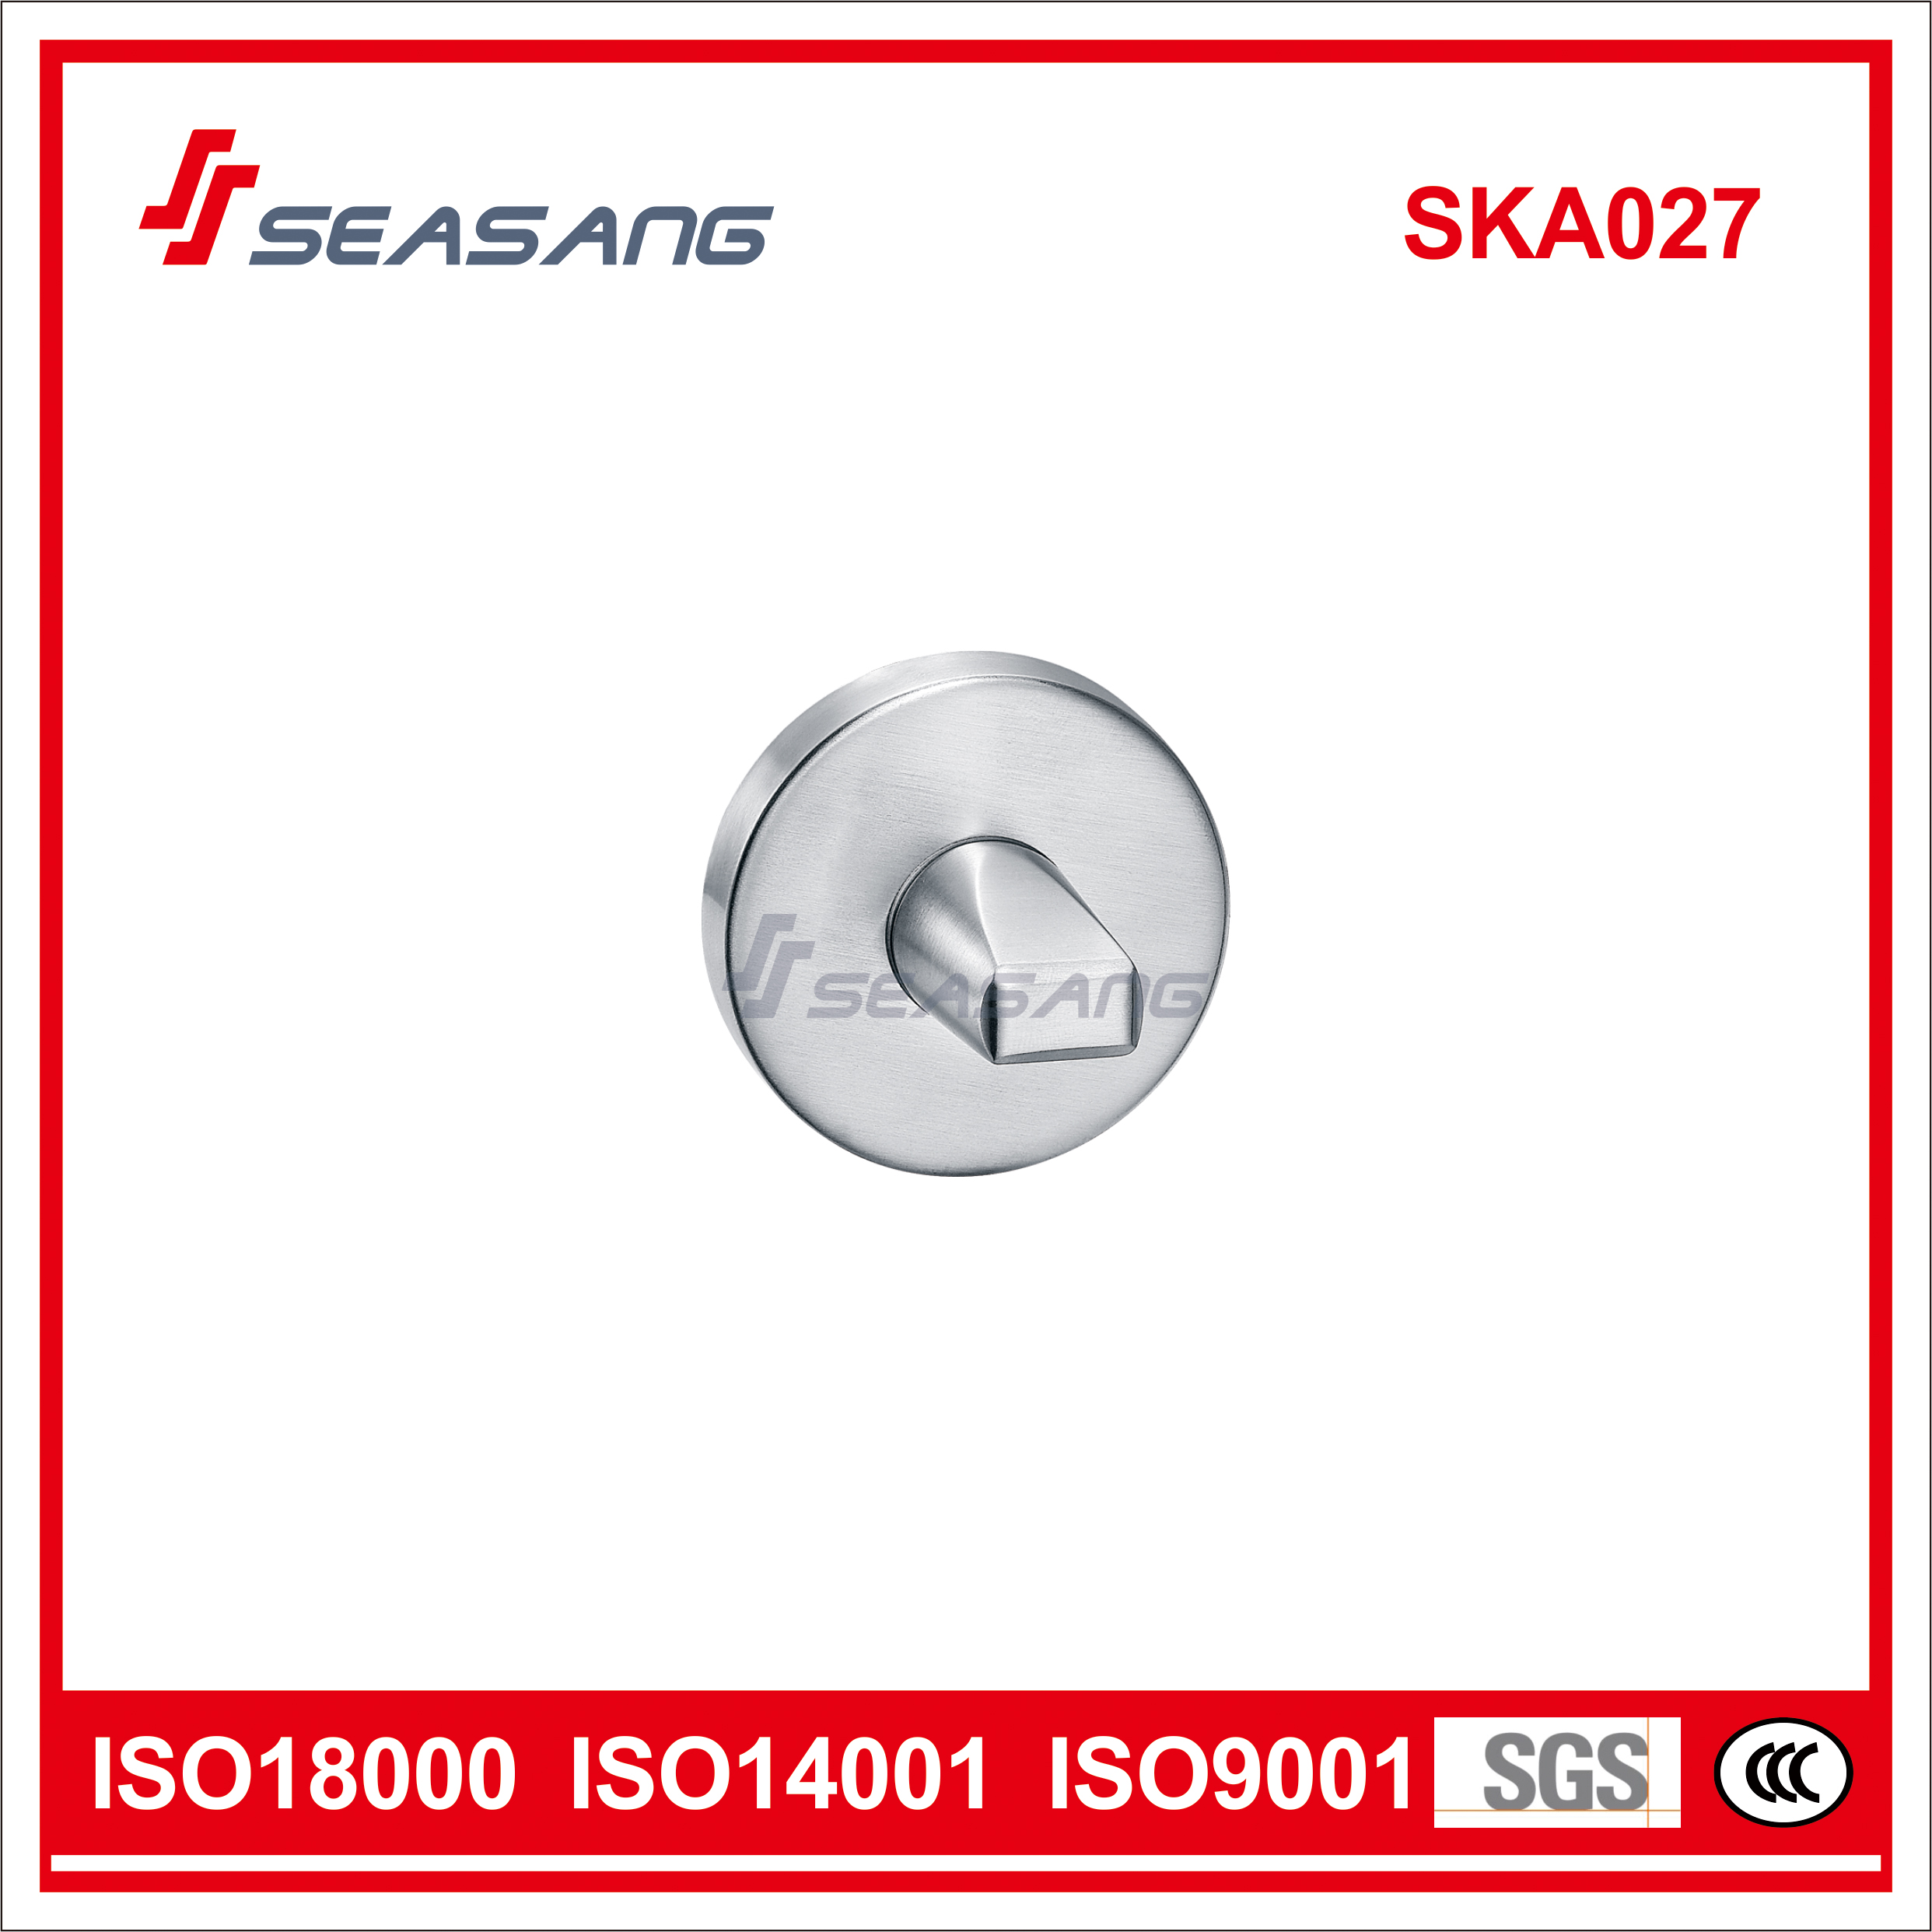 Stainless Steel Bathroom Handle Ska027